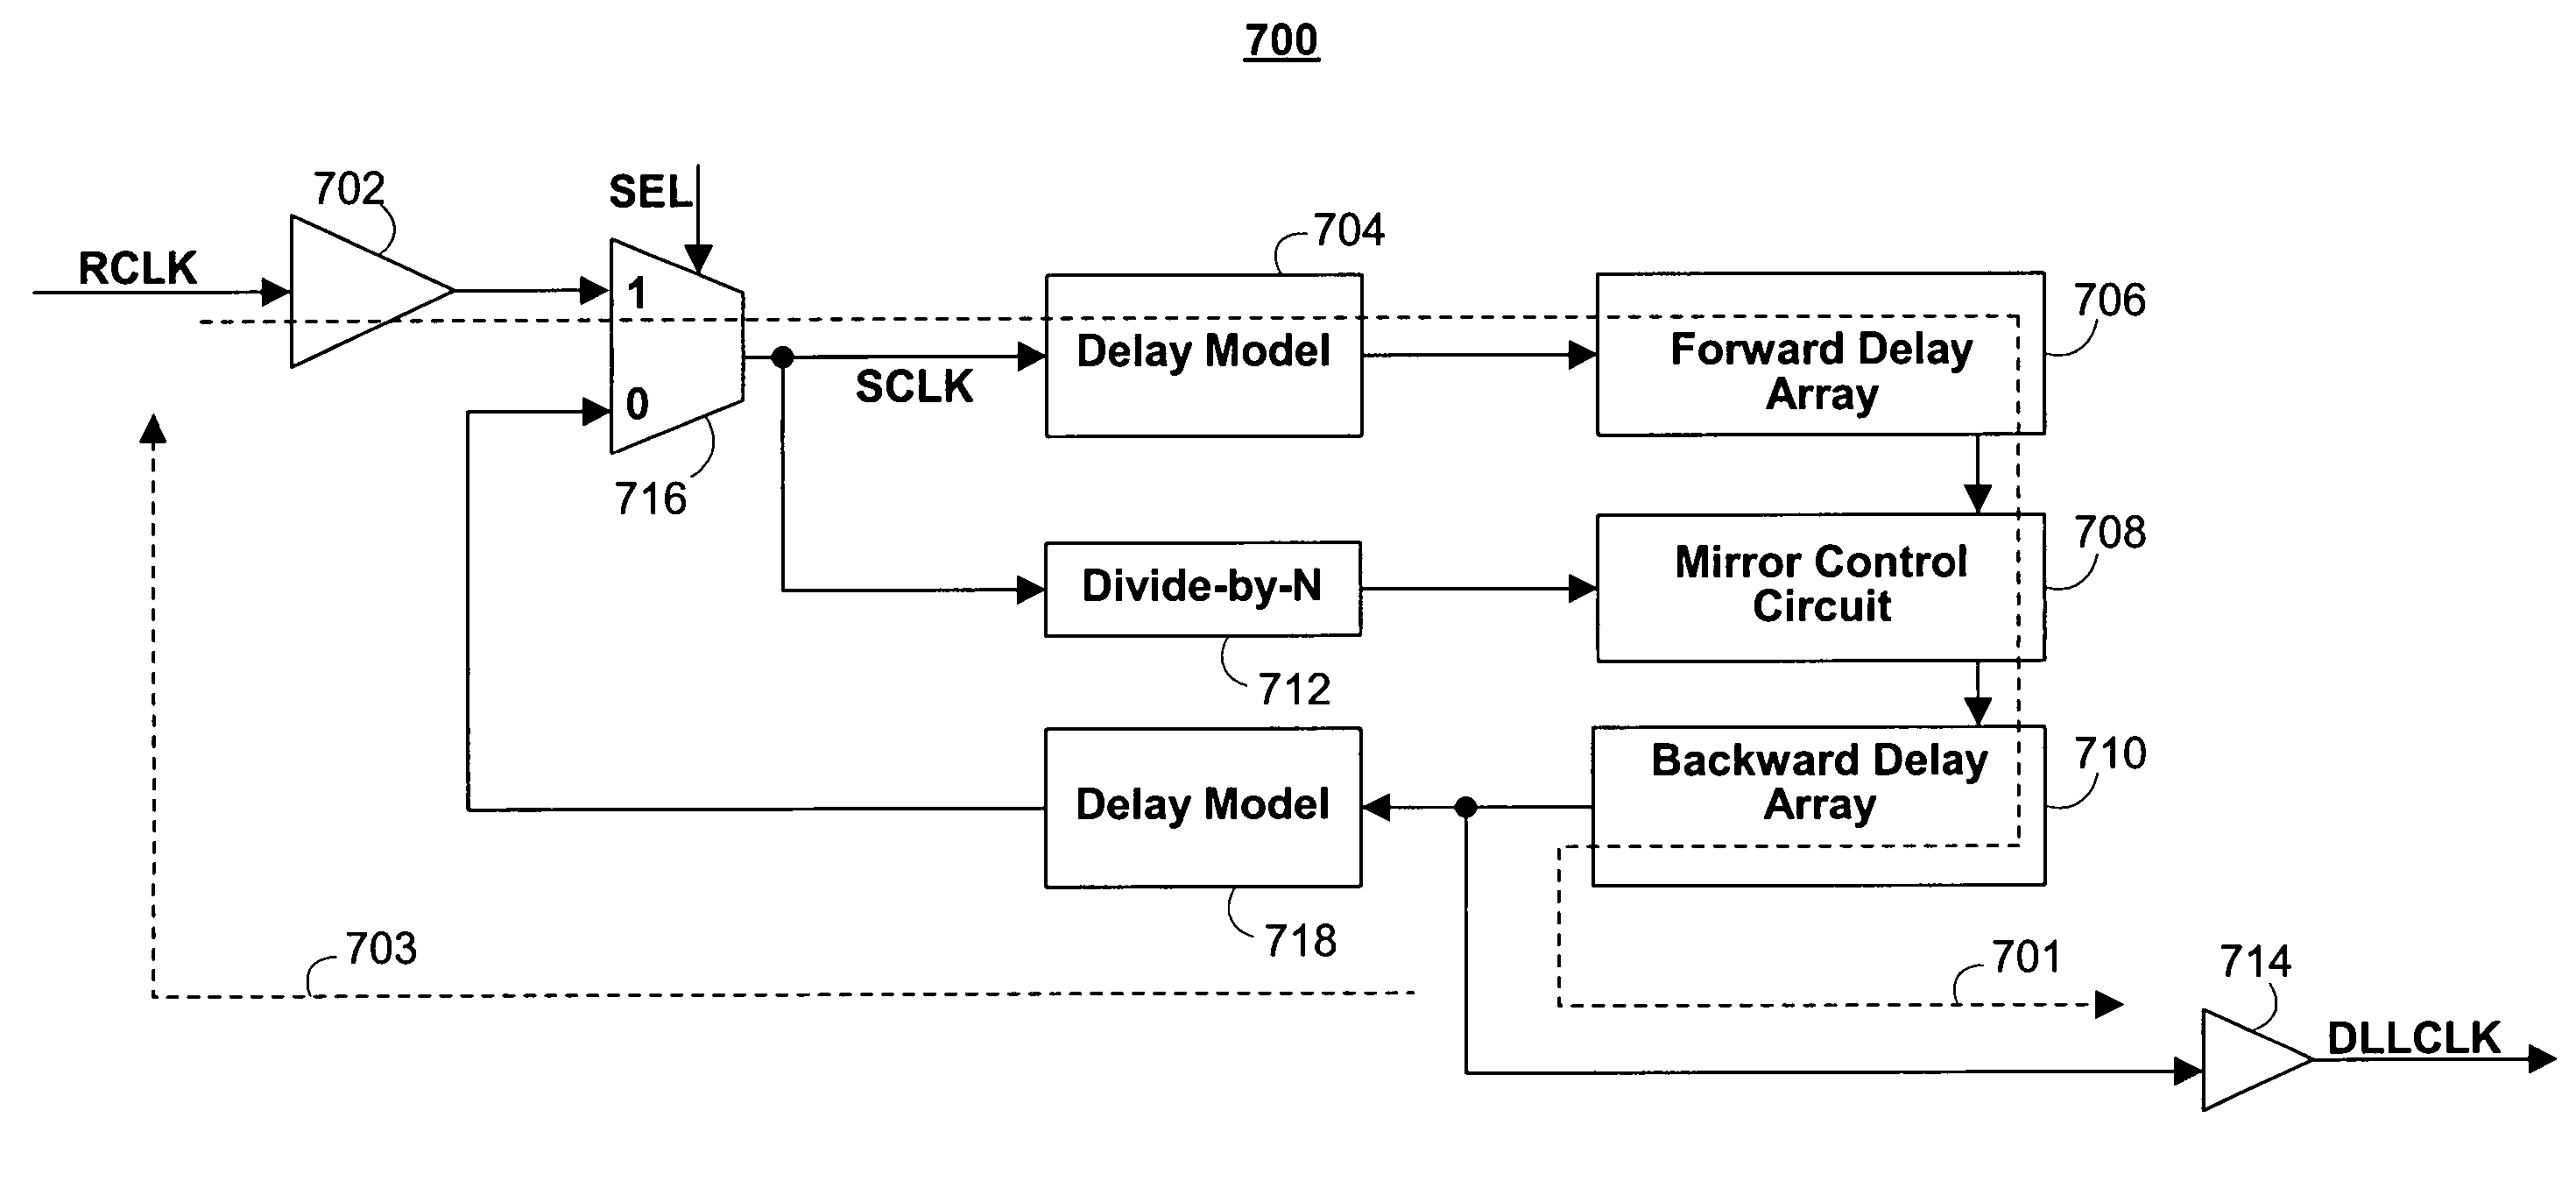 Clock capture in clock synchronization circuitry